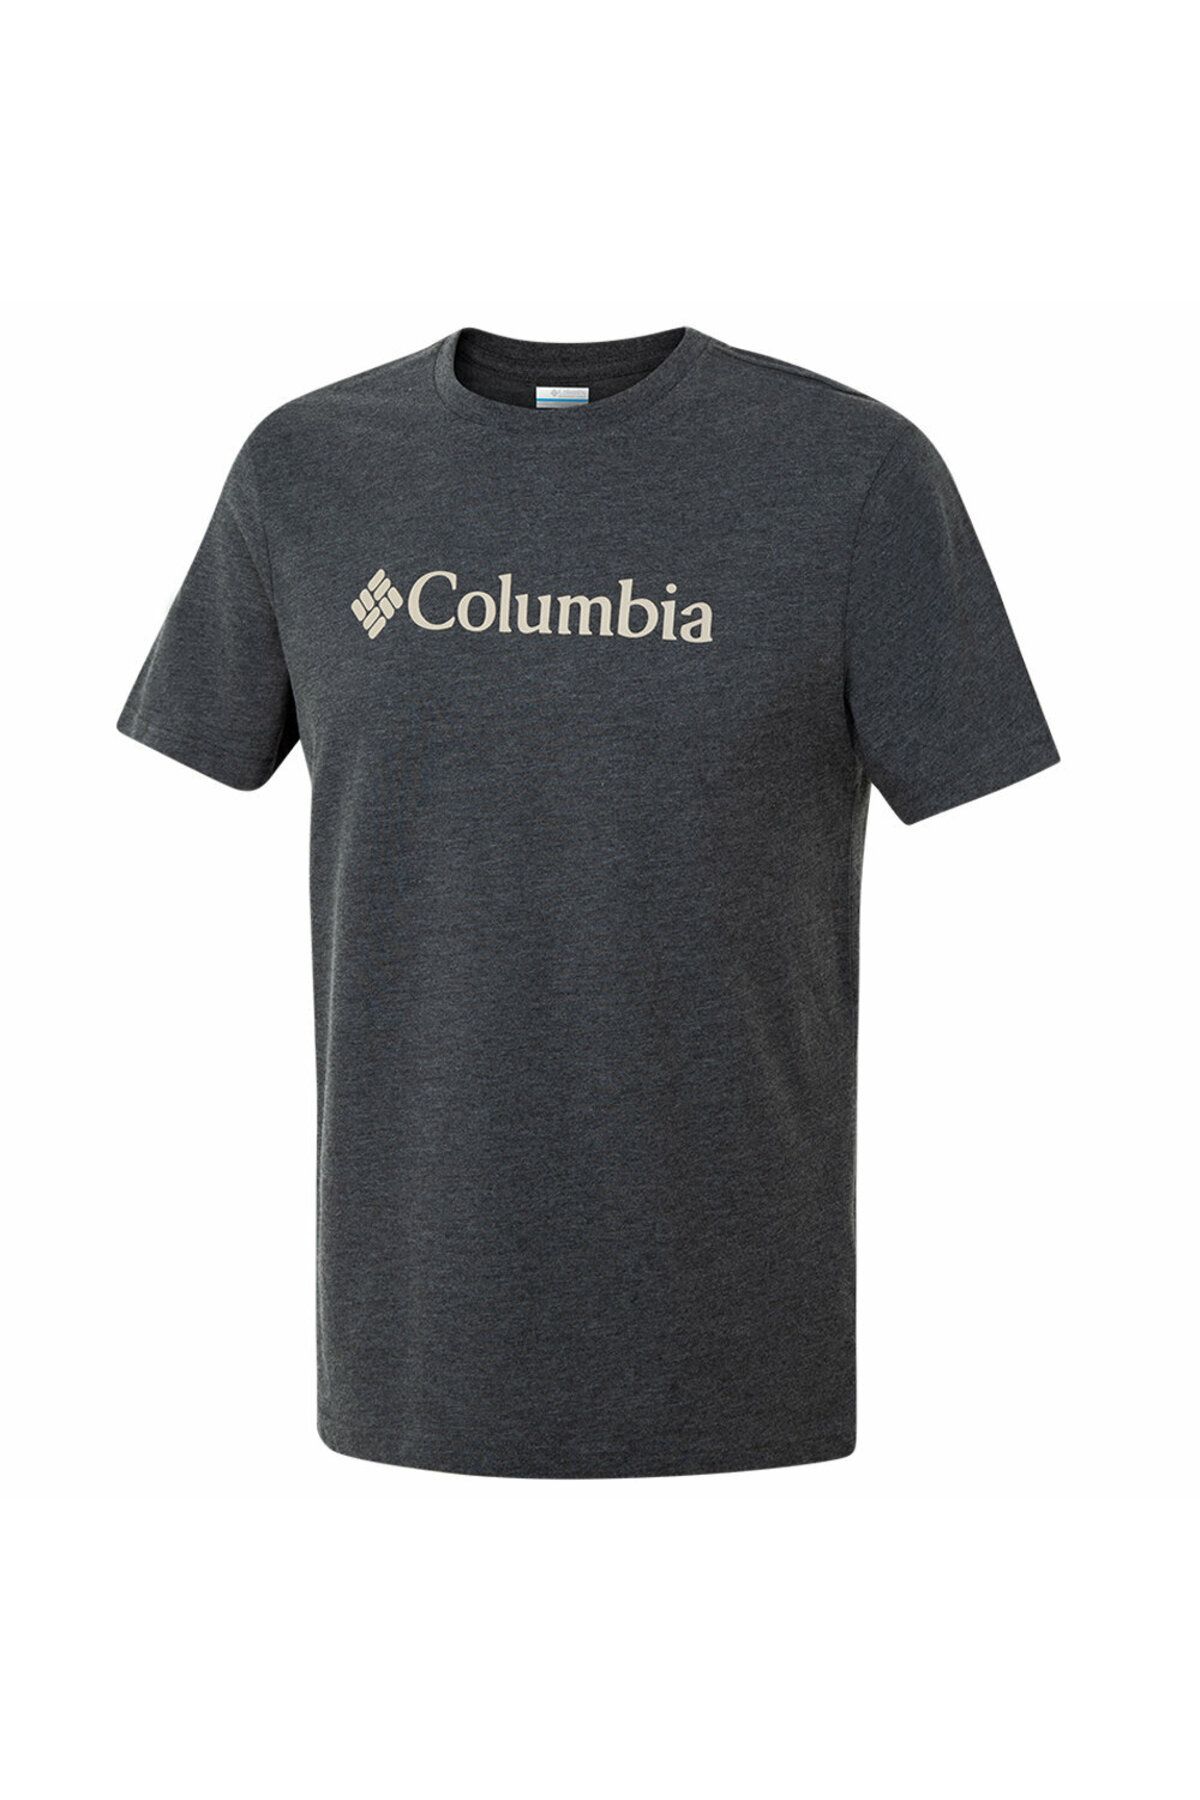 Columbia Erkek Siyah T-shirt 1680050012-0012